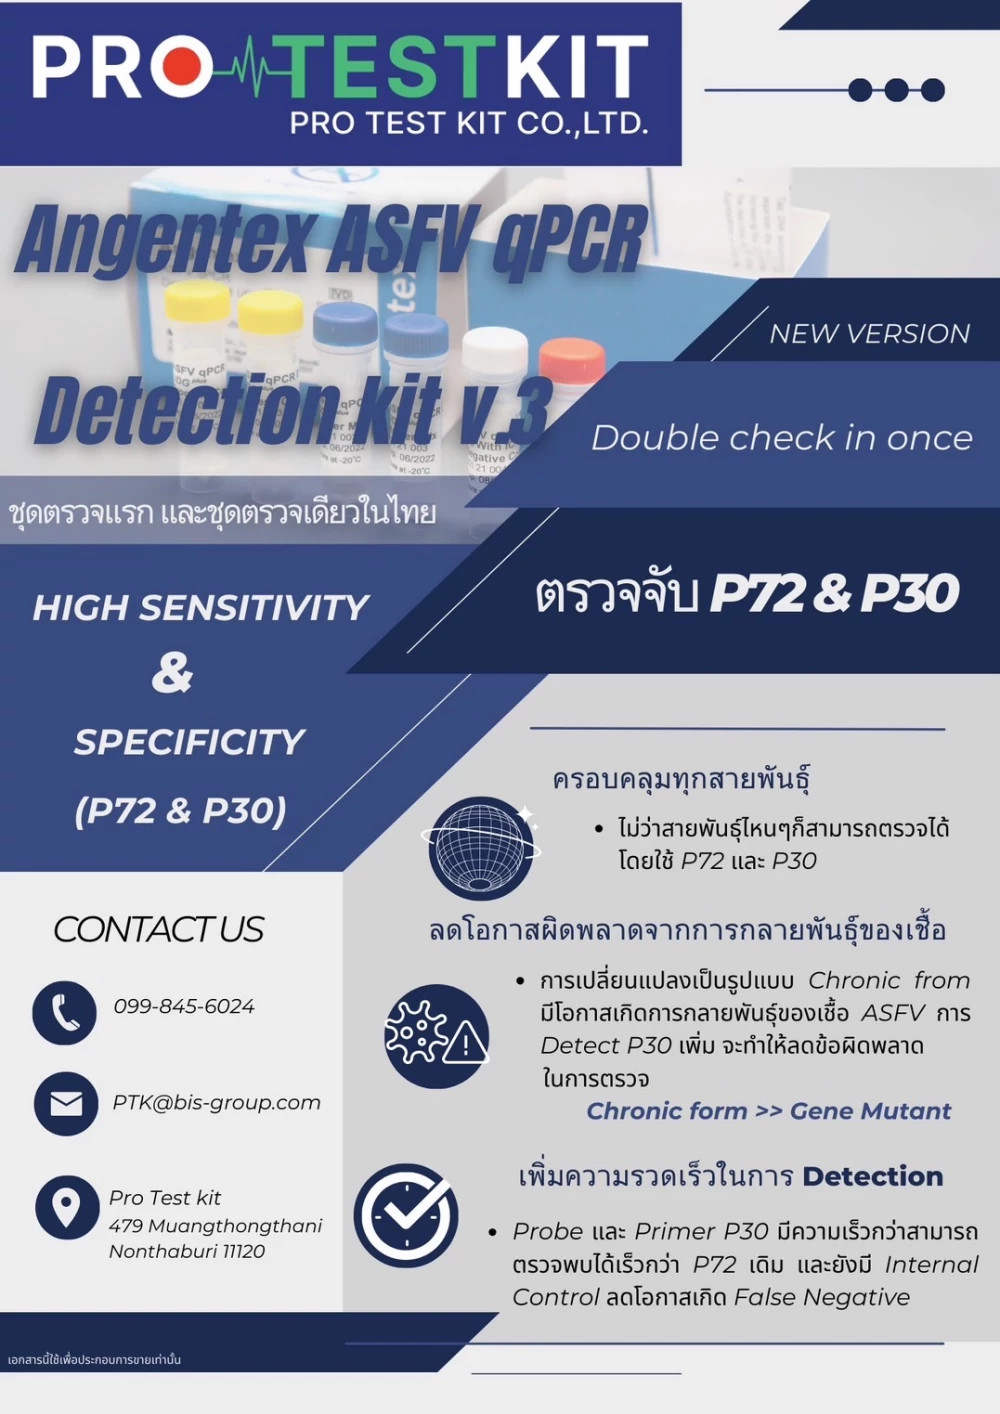 Angentex ASFV qPCR Detection Kit V.3